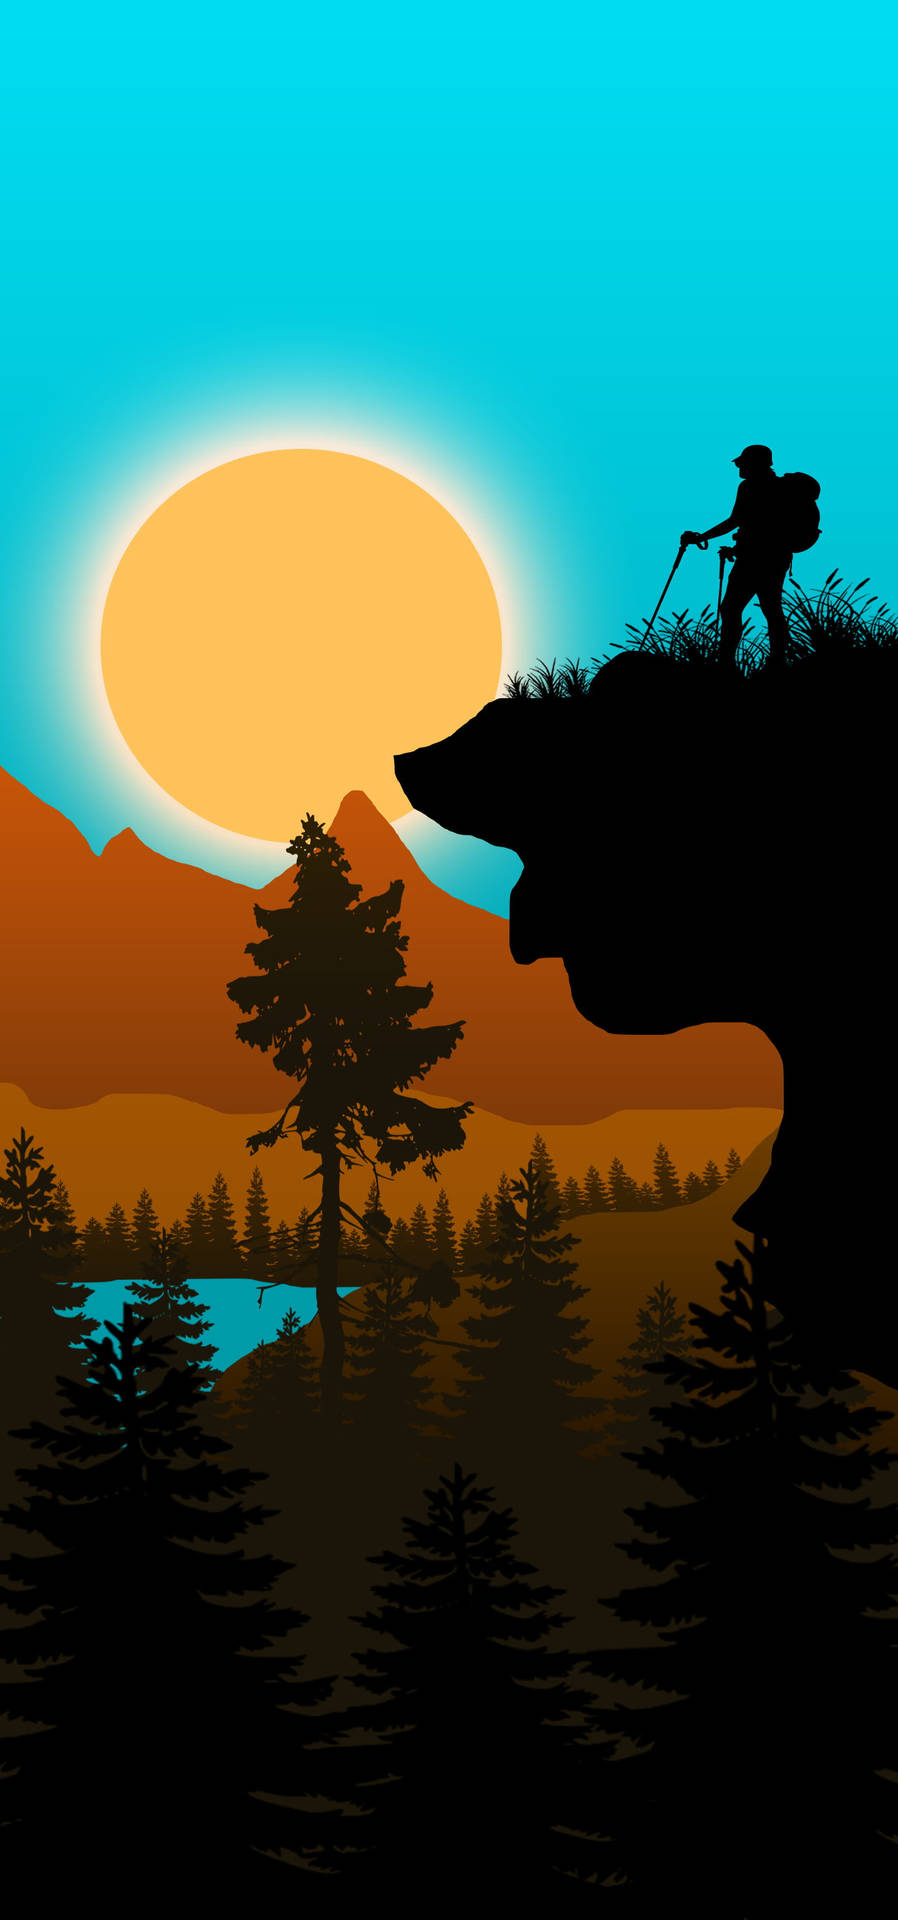 Digital Artwork Mountaineer iPhone X Nature Wallpaper